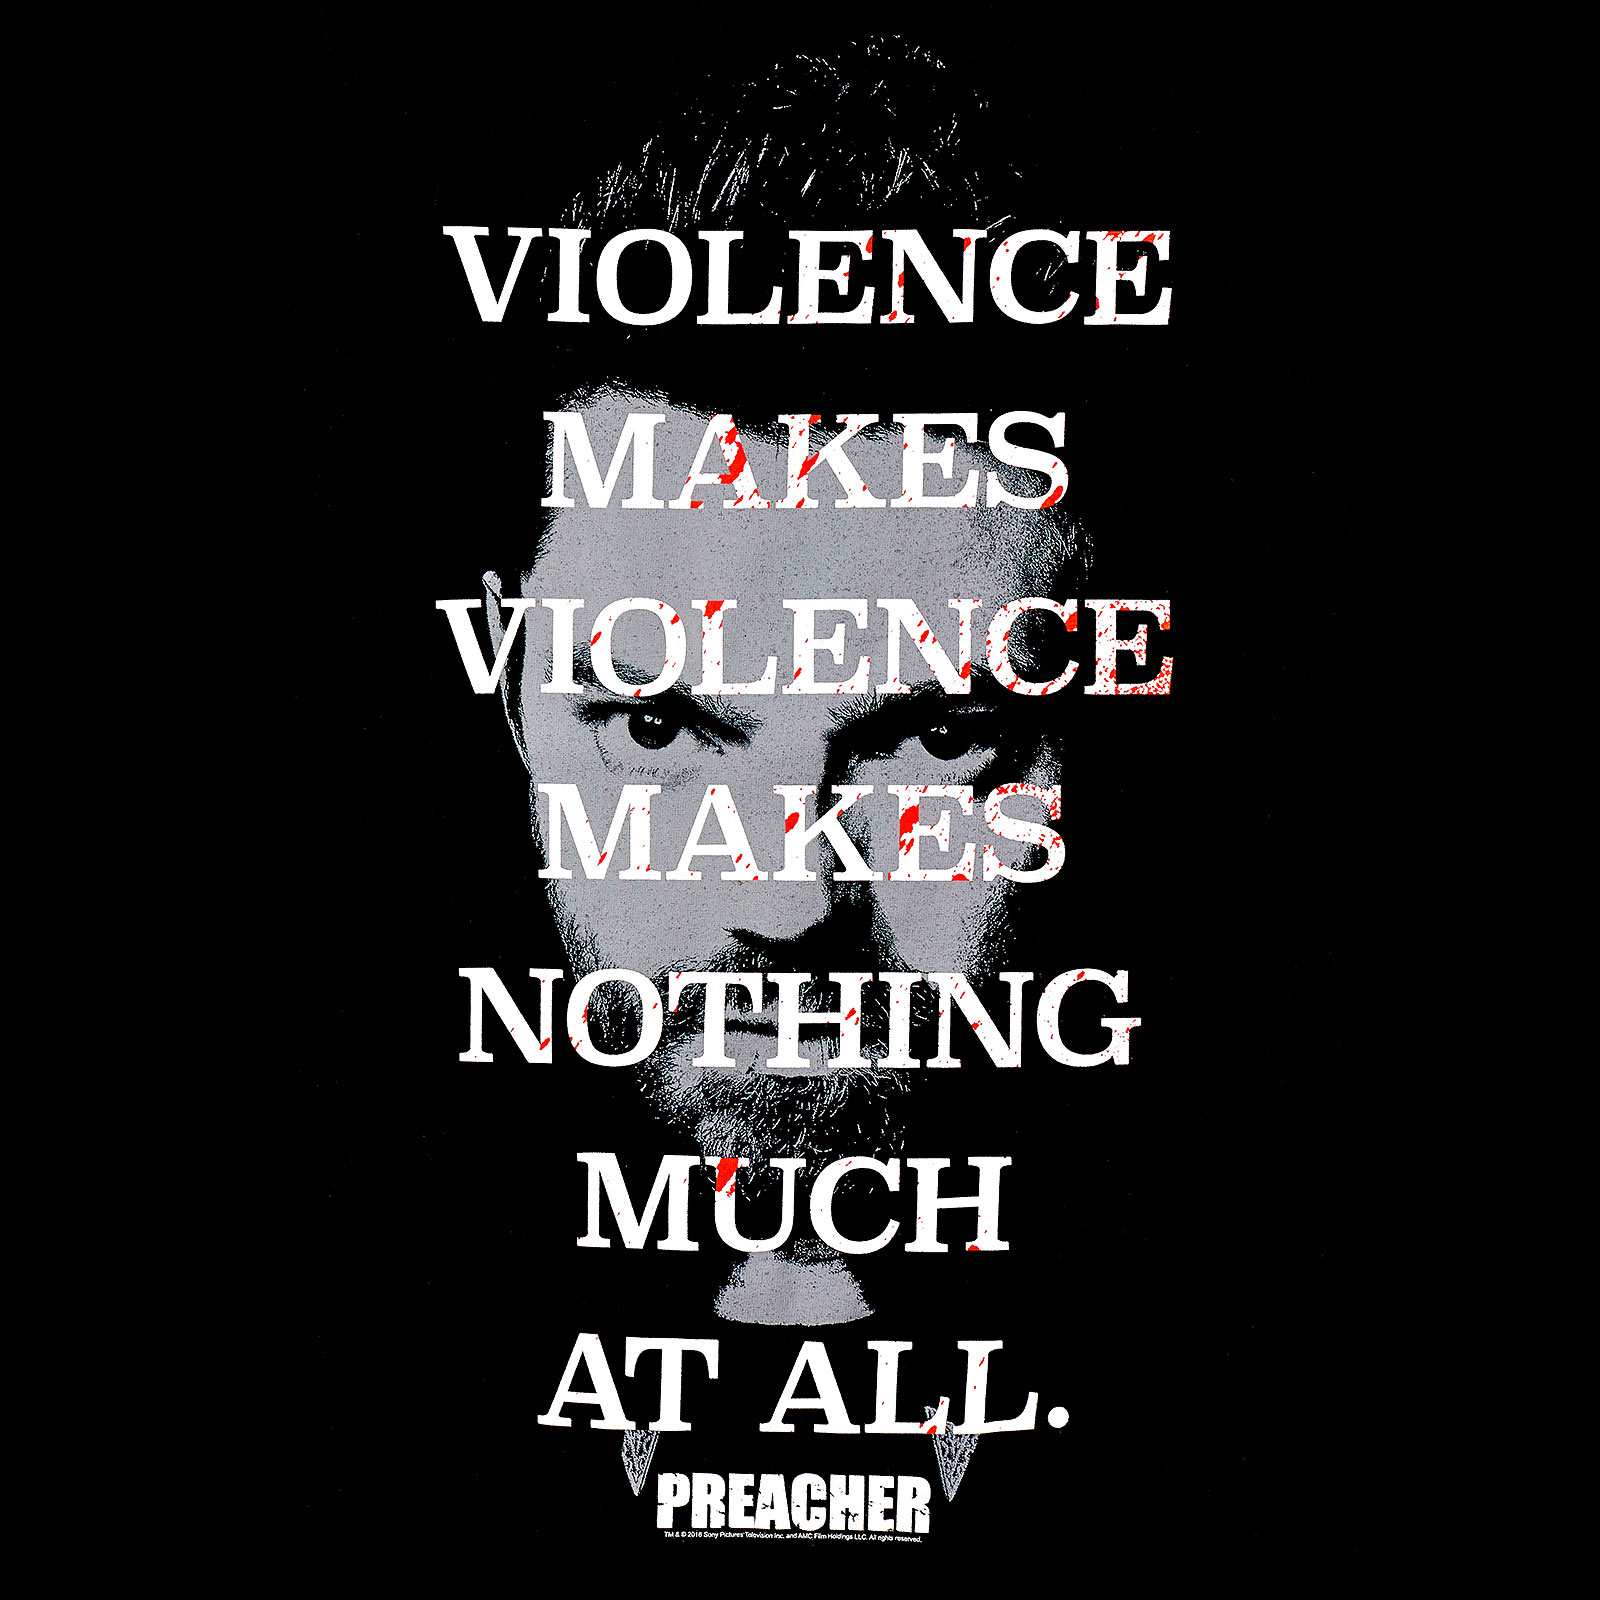 Preacher - Violence Makes Violence T-Shirt Black